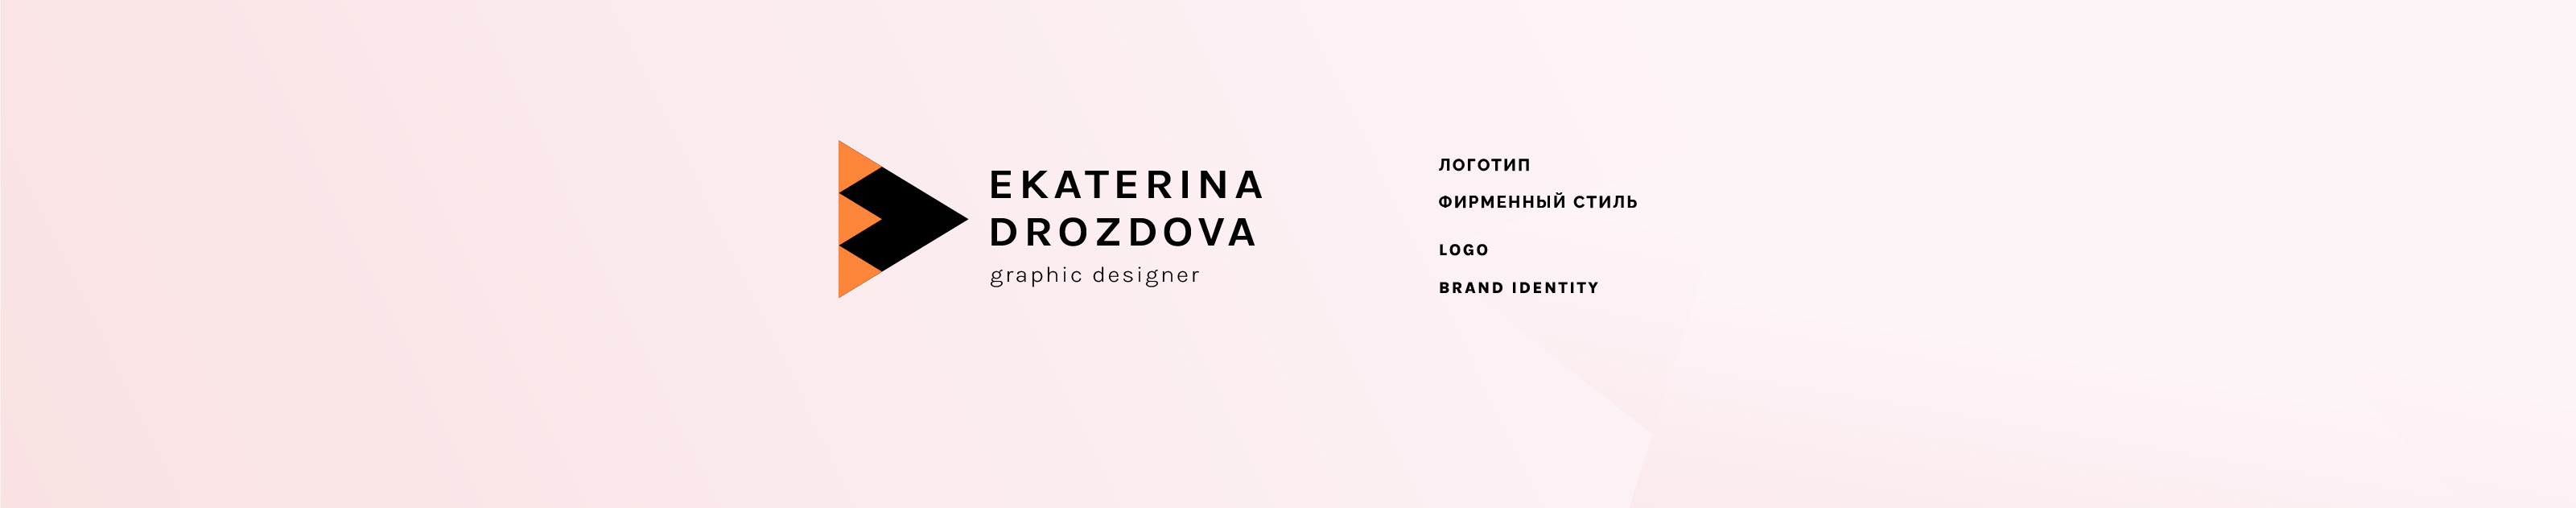 Баннер профиля Ekaterina Drozdova